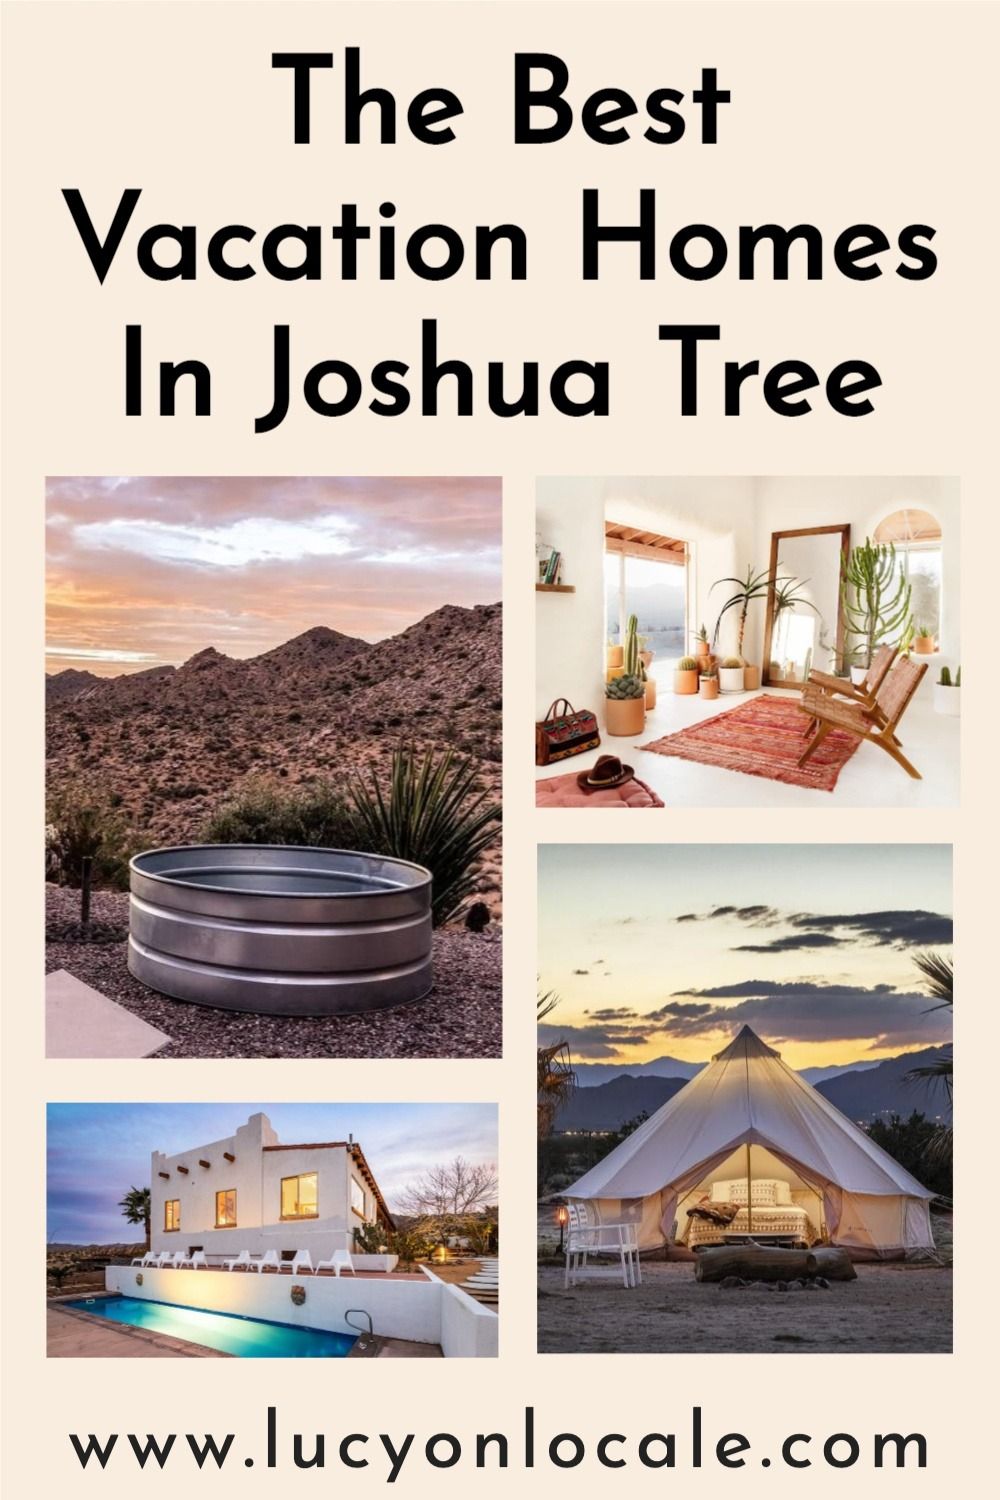 Joshua Tree vacation rentals